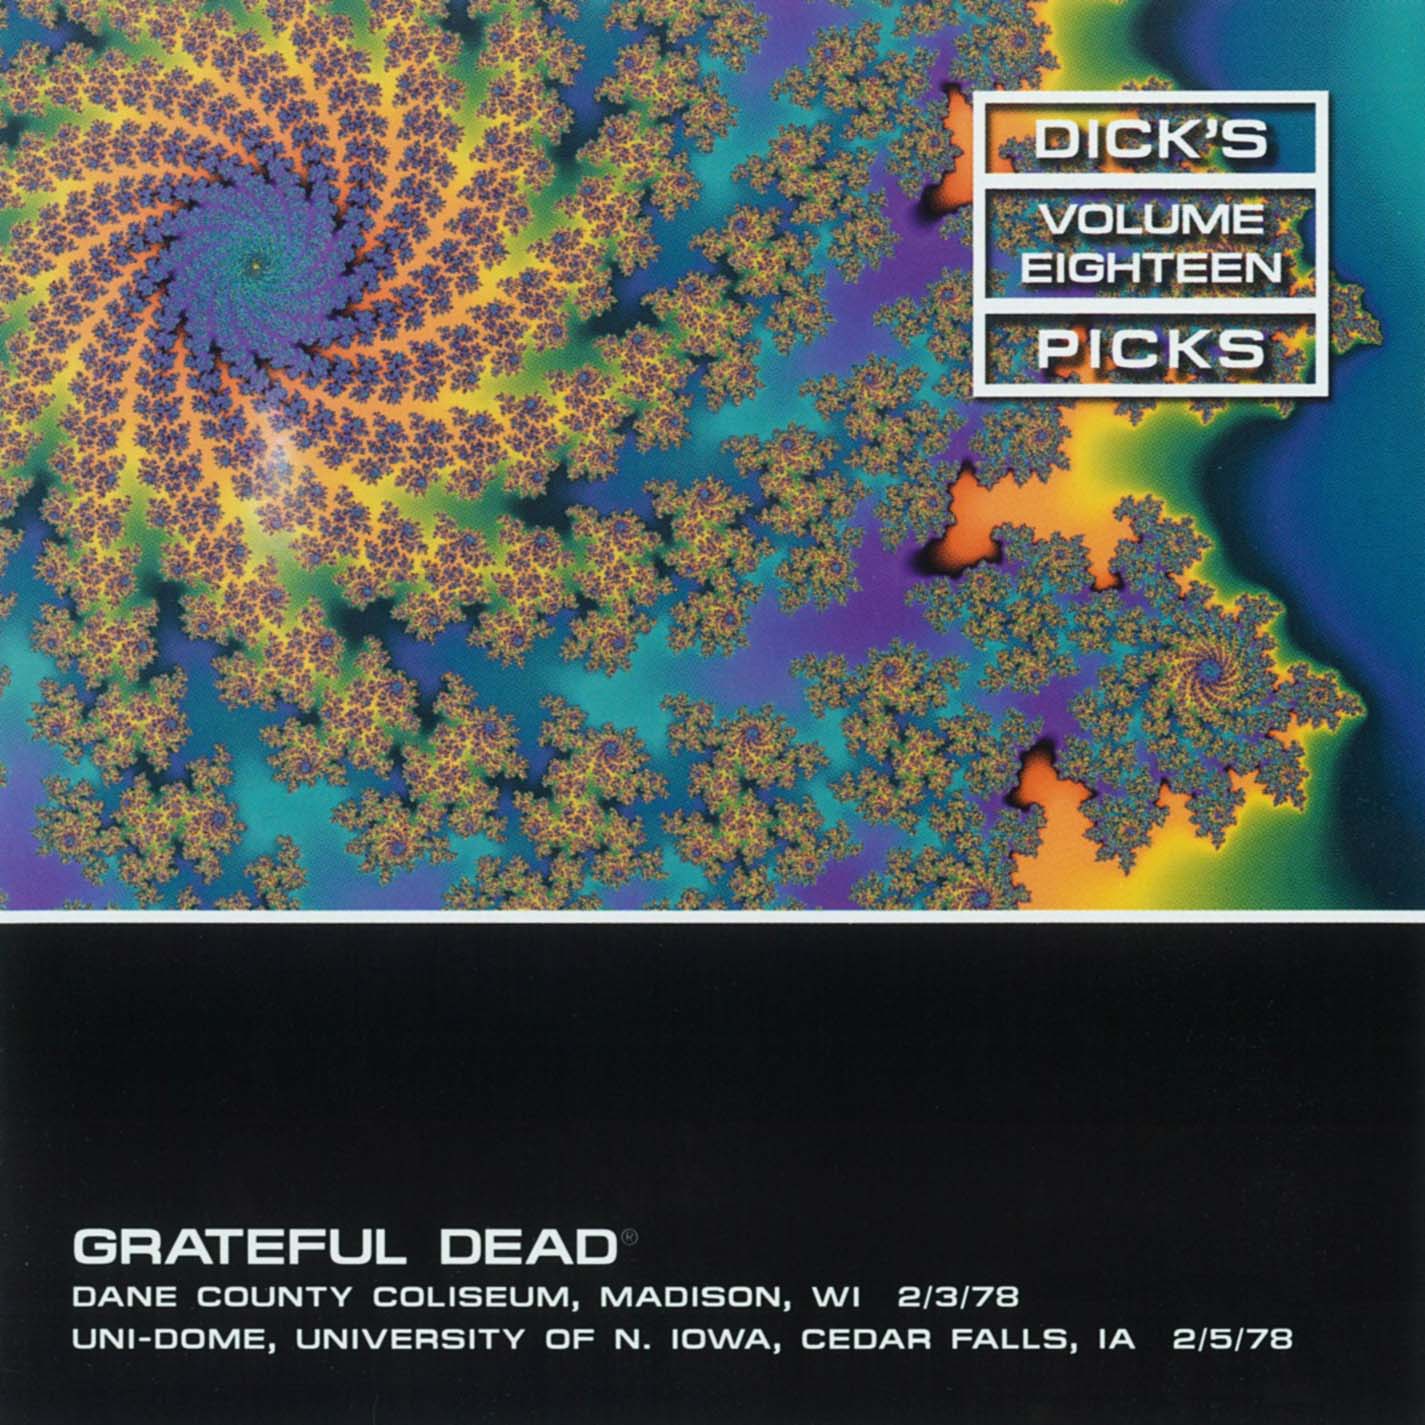 Grateful Dead Dick's Picks 18 album cover artwork